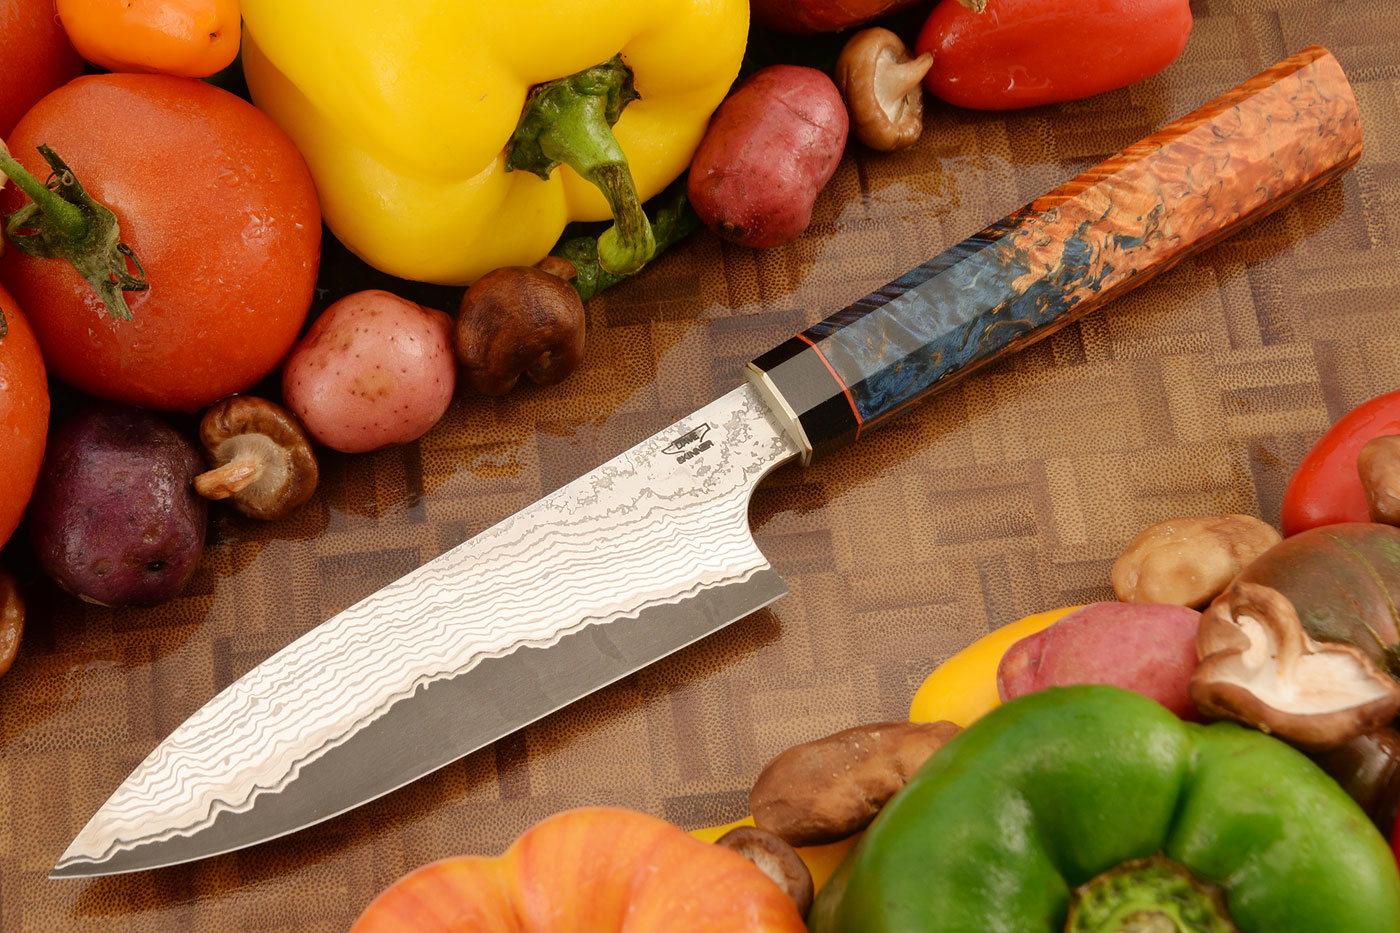 Chef's Knife (Petit Gyuto) with Masur Birch (5-1/2 in.) - VG10 San Mai Damascus